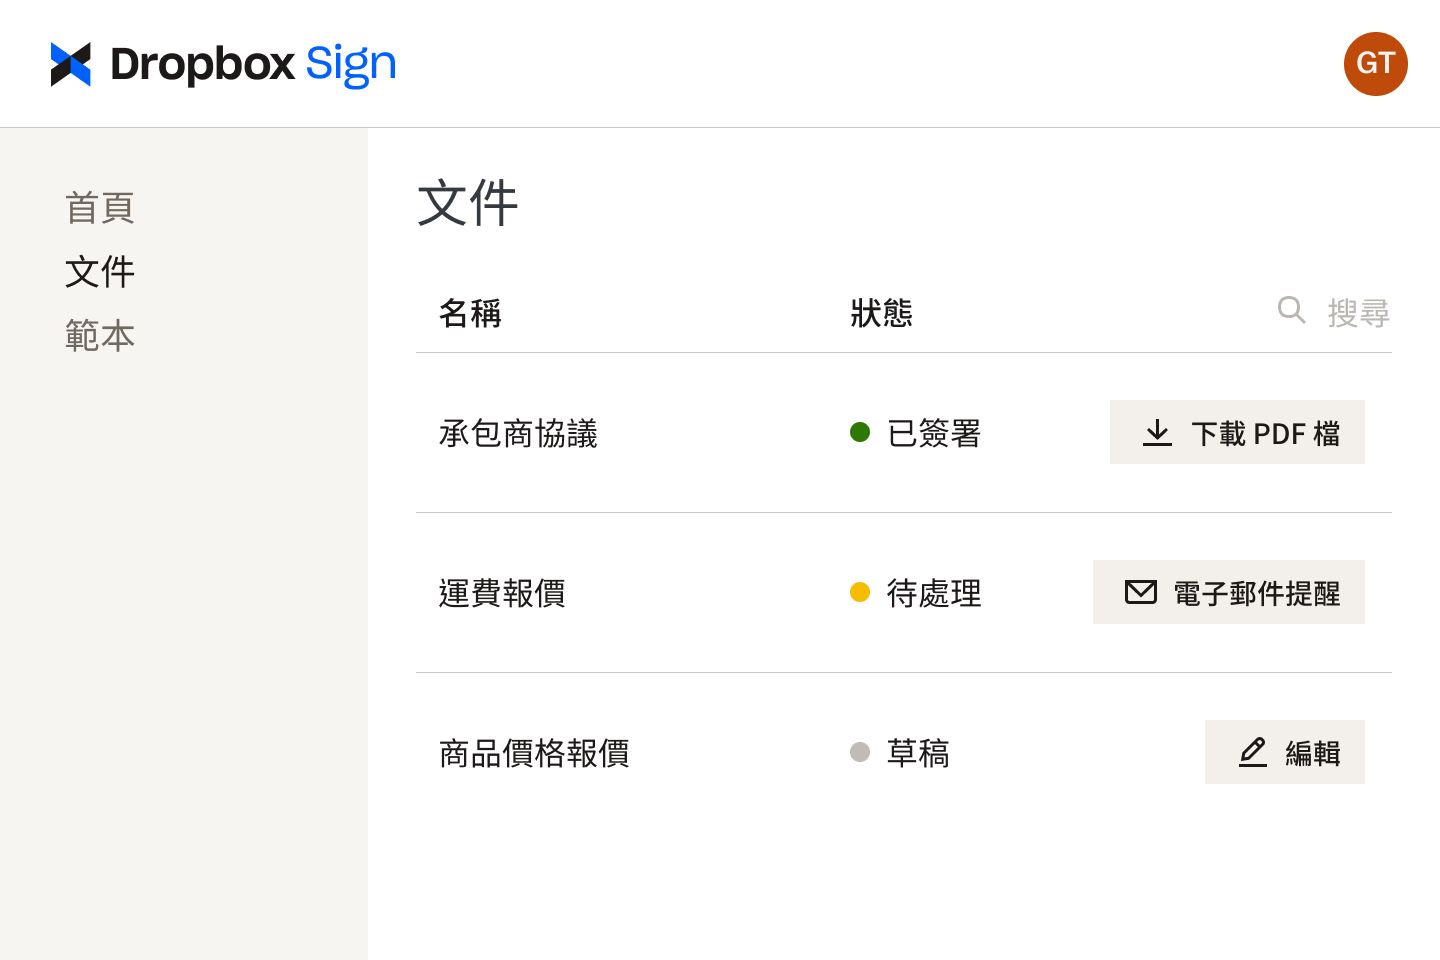 Dropbox Sign 介面不同檢視階段的文件